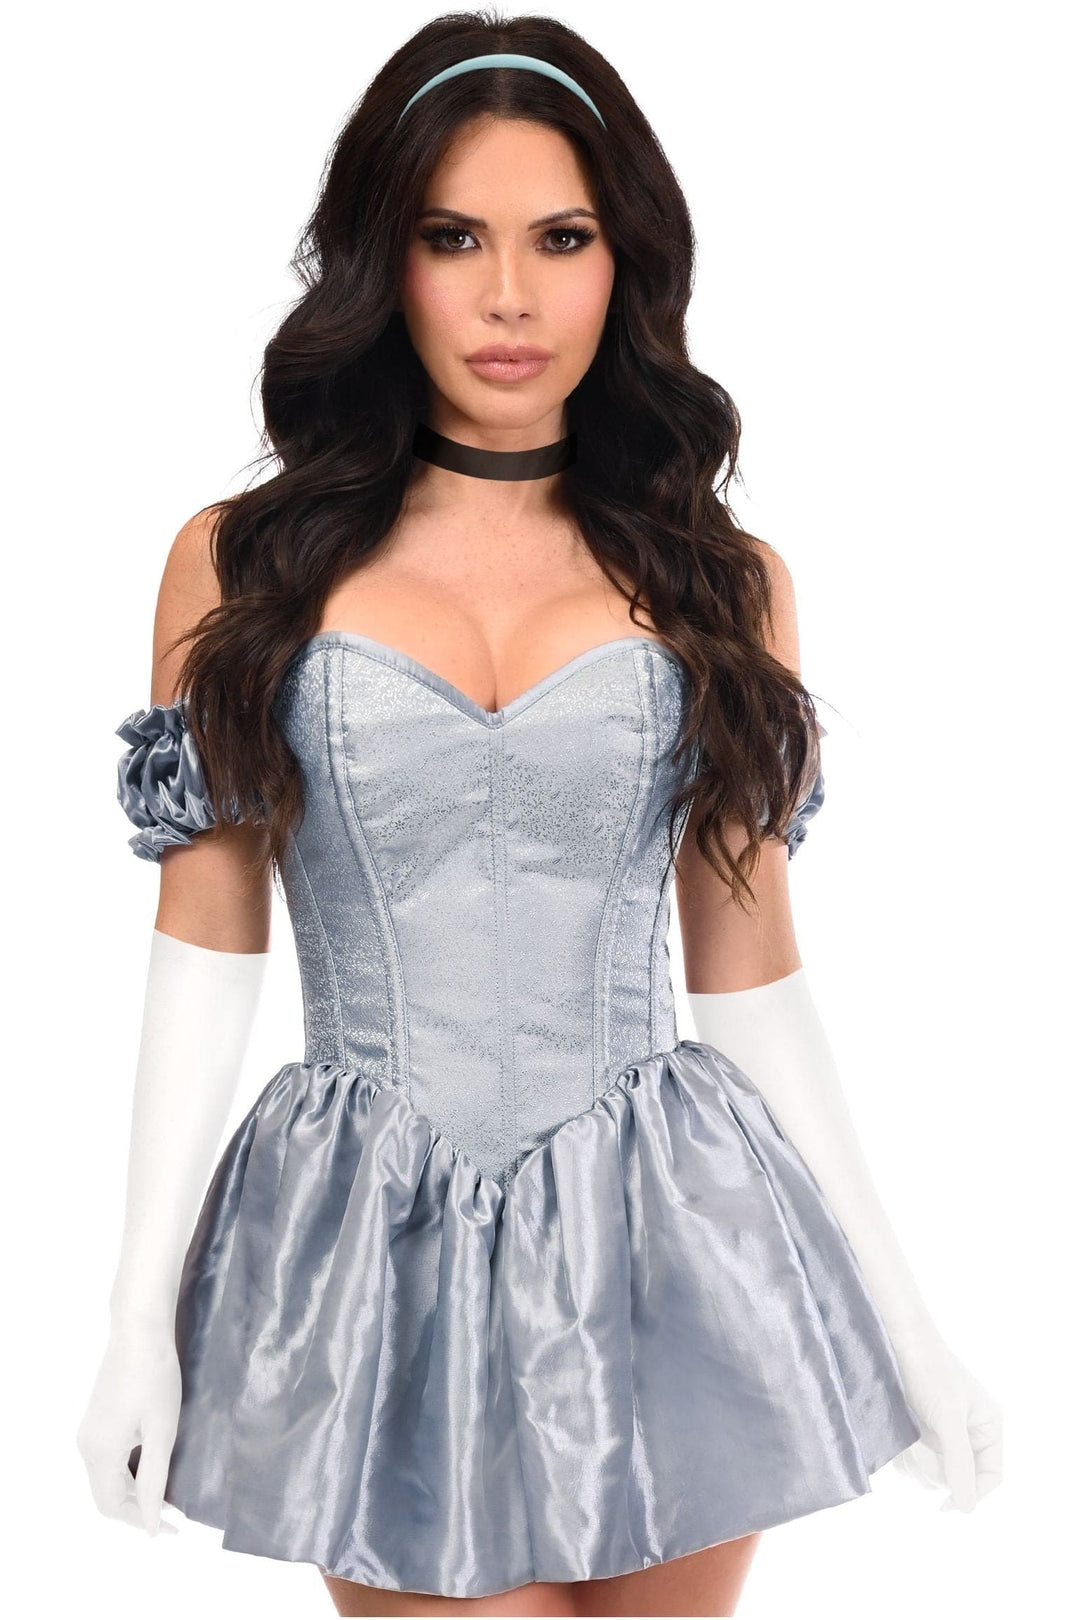 Top Drawer 4 PC Storybook Princess Corset Dress Costume